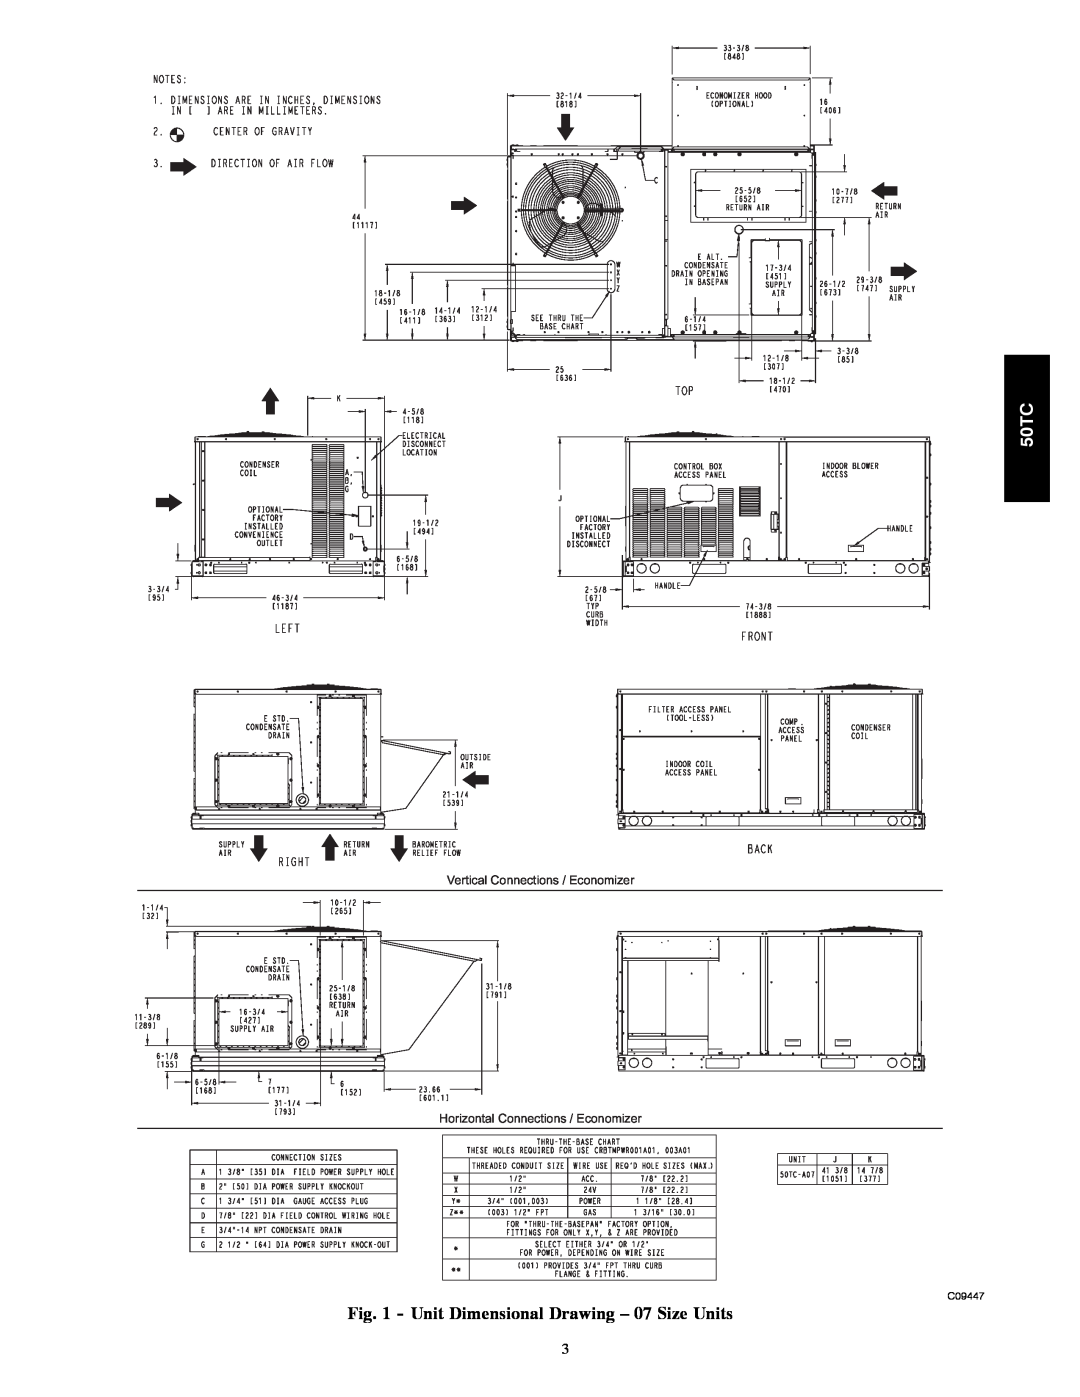 Carrier 50TC installation instructions Unit Dimensional Drawing - 07 Size Units, Vertical Connections / Economizer, C09447 